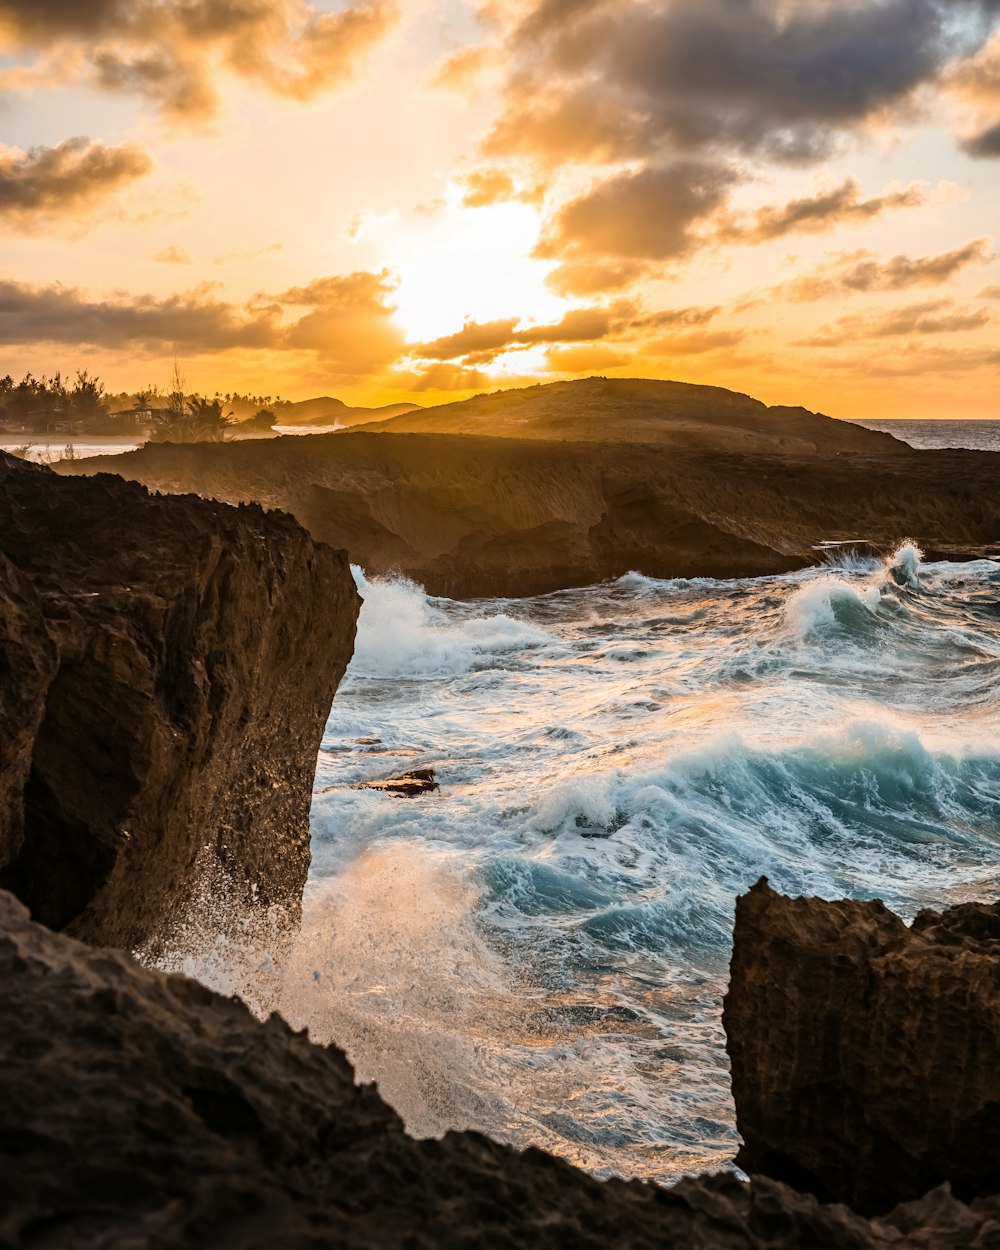 ocean waves crashing on brown rocky shore during sunset